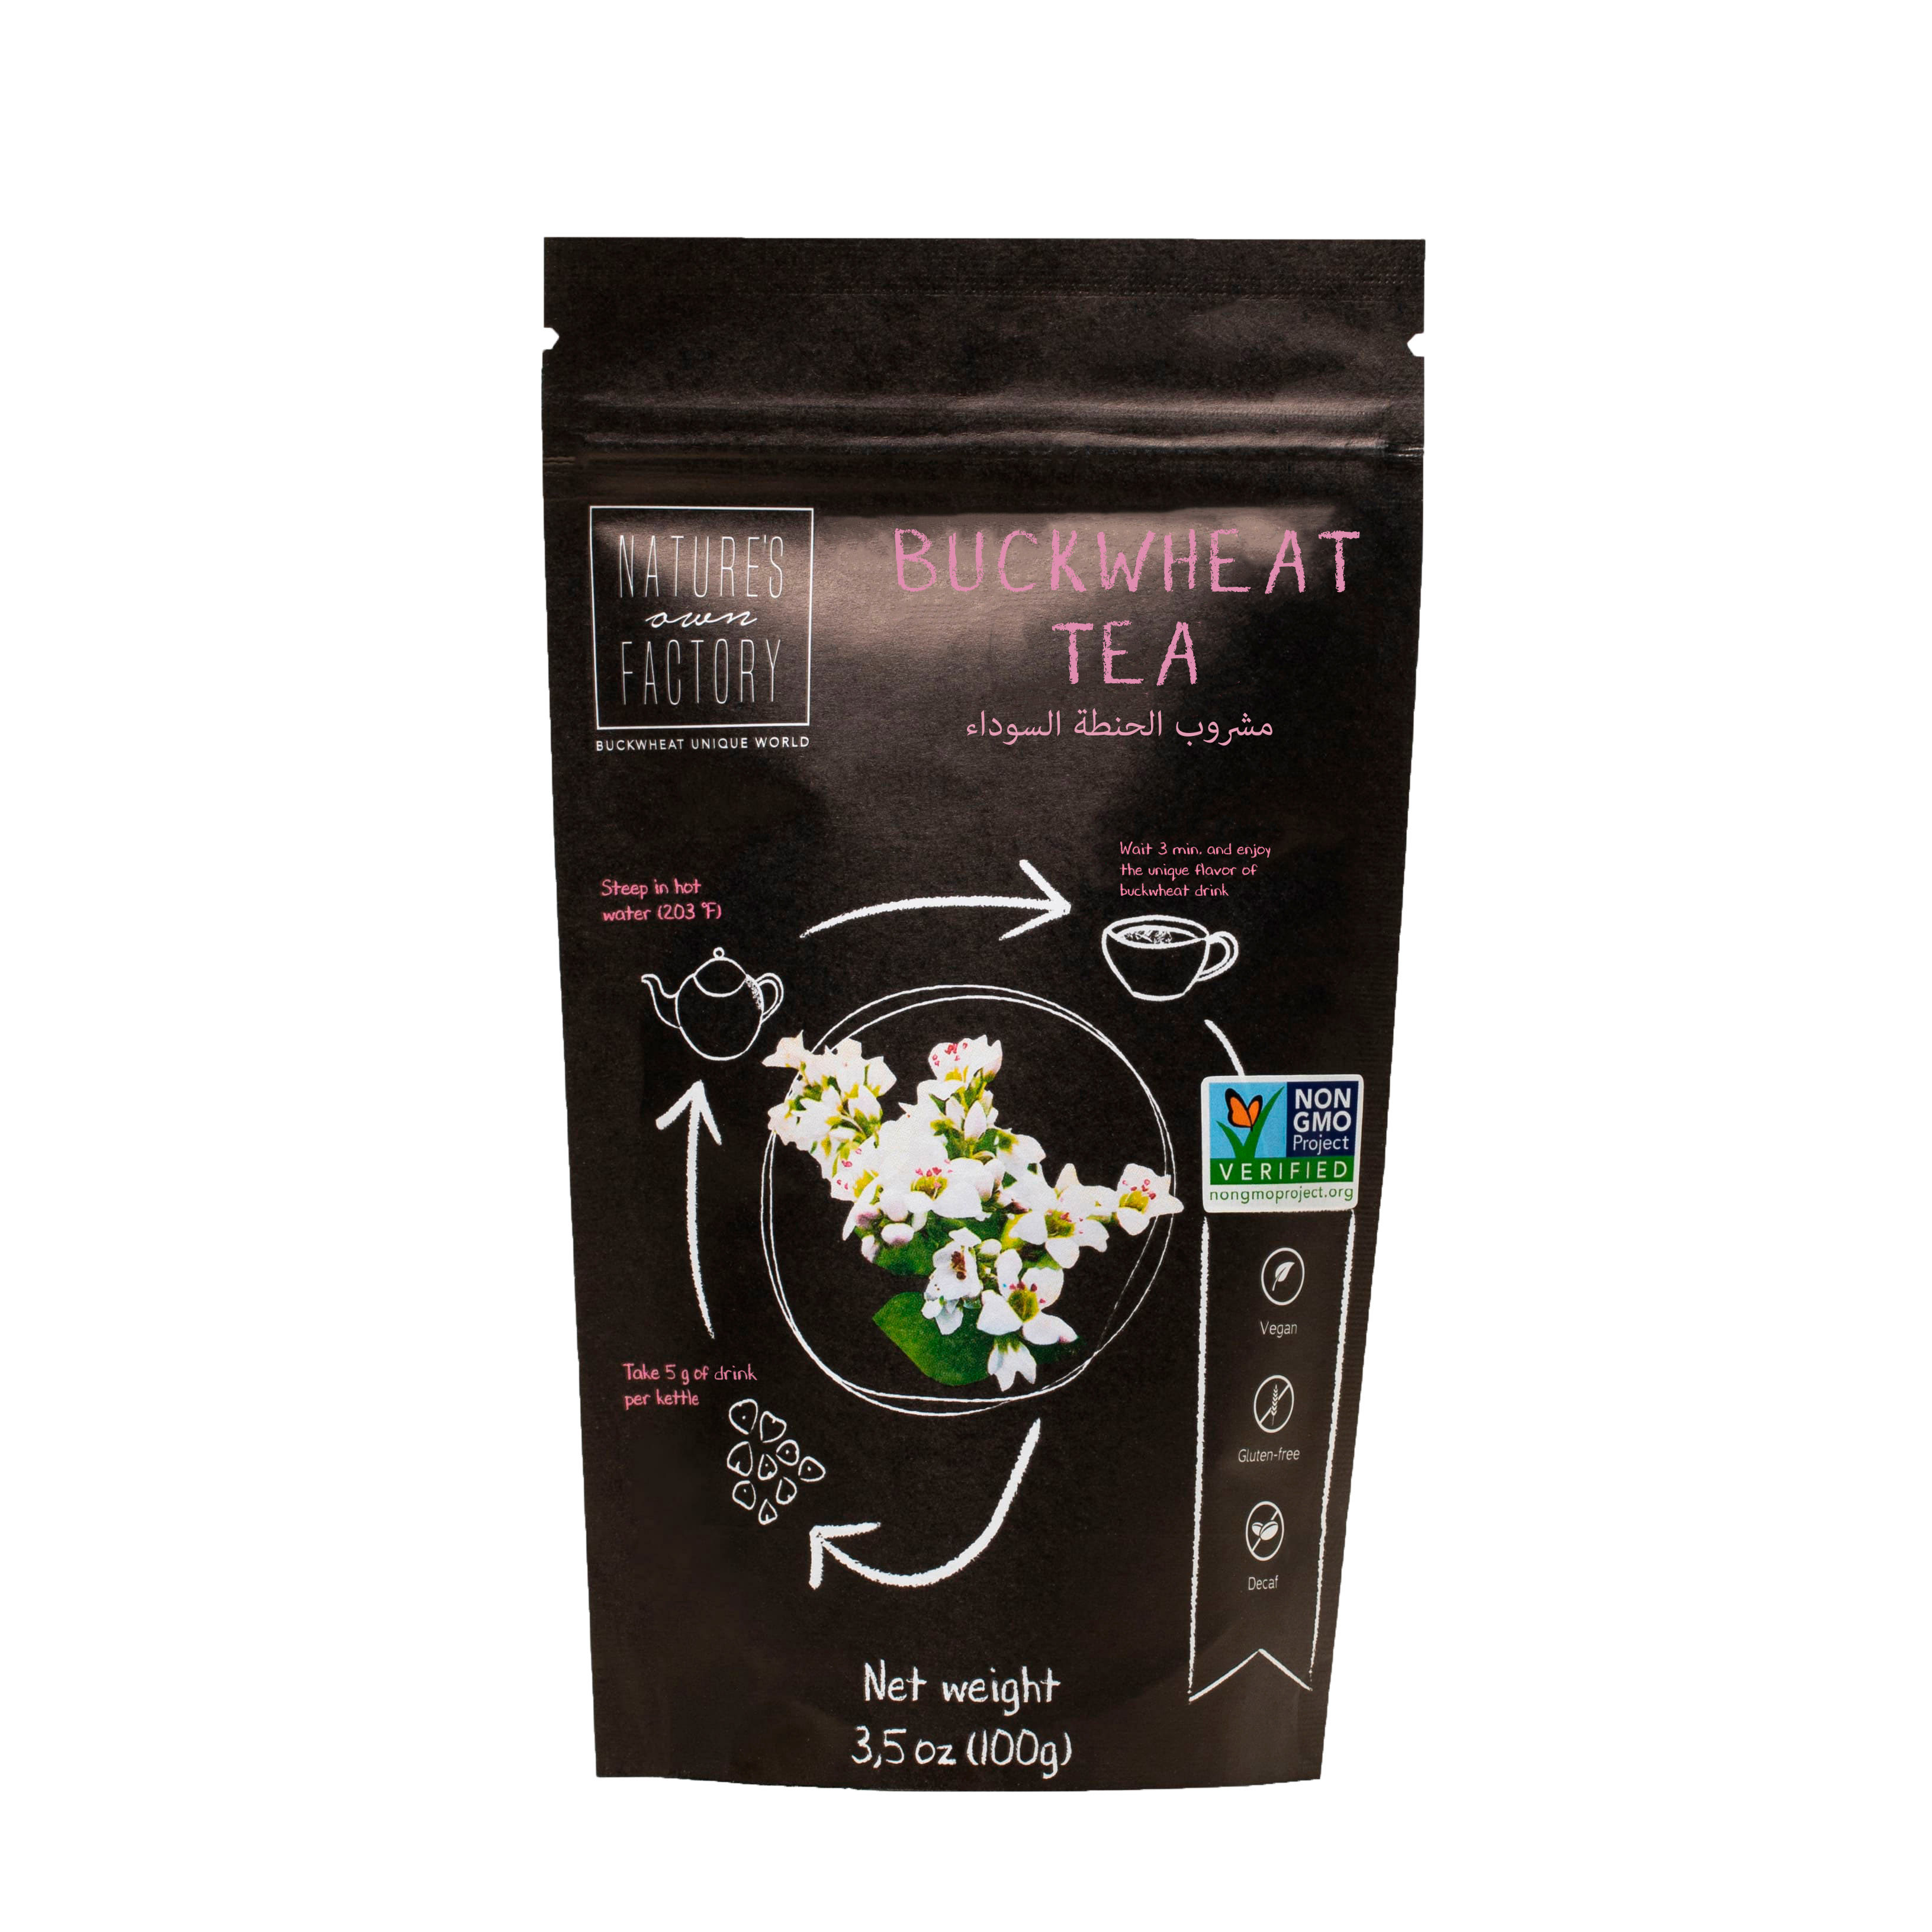 NATURE´S OWN FACTORY BUCKWHEAT TEA 50 units per case 100 g